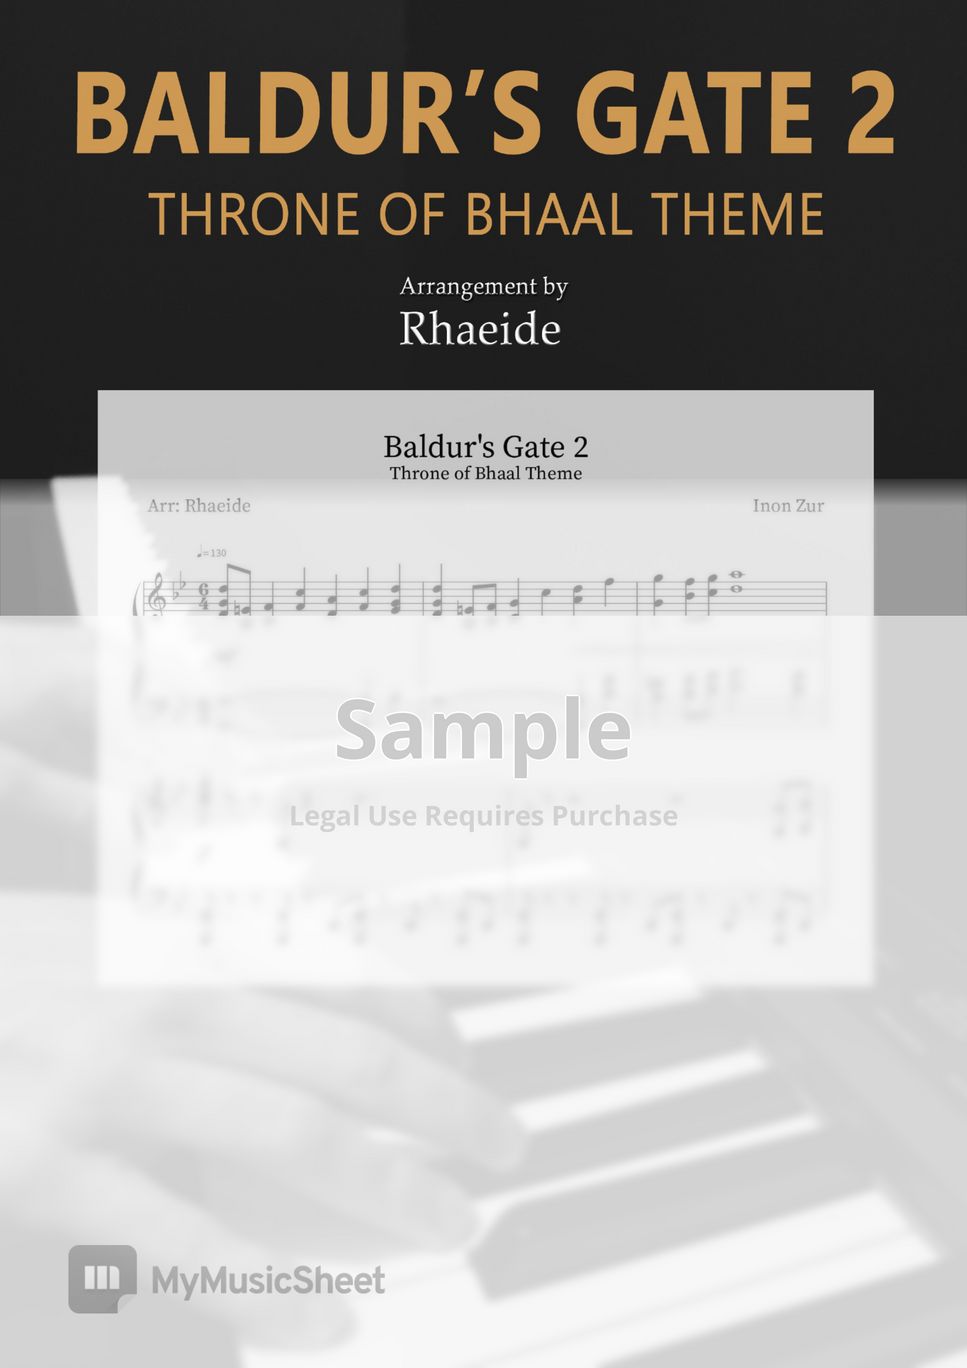 Baldur's Gate 2 - Throne of Bhaal Theme (Inon Zur) by Rhaeide